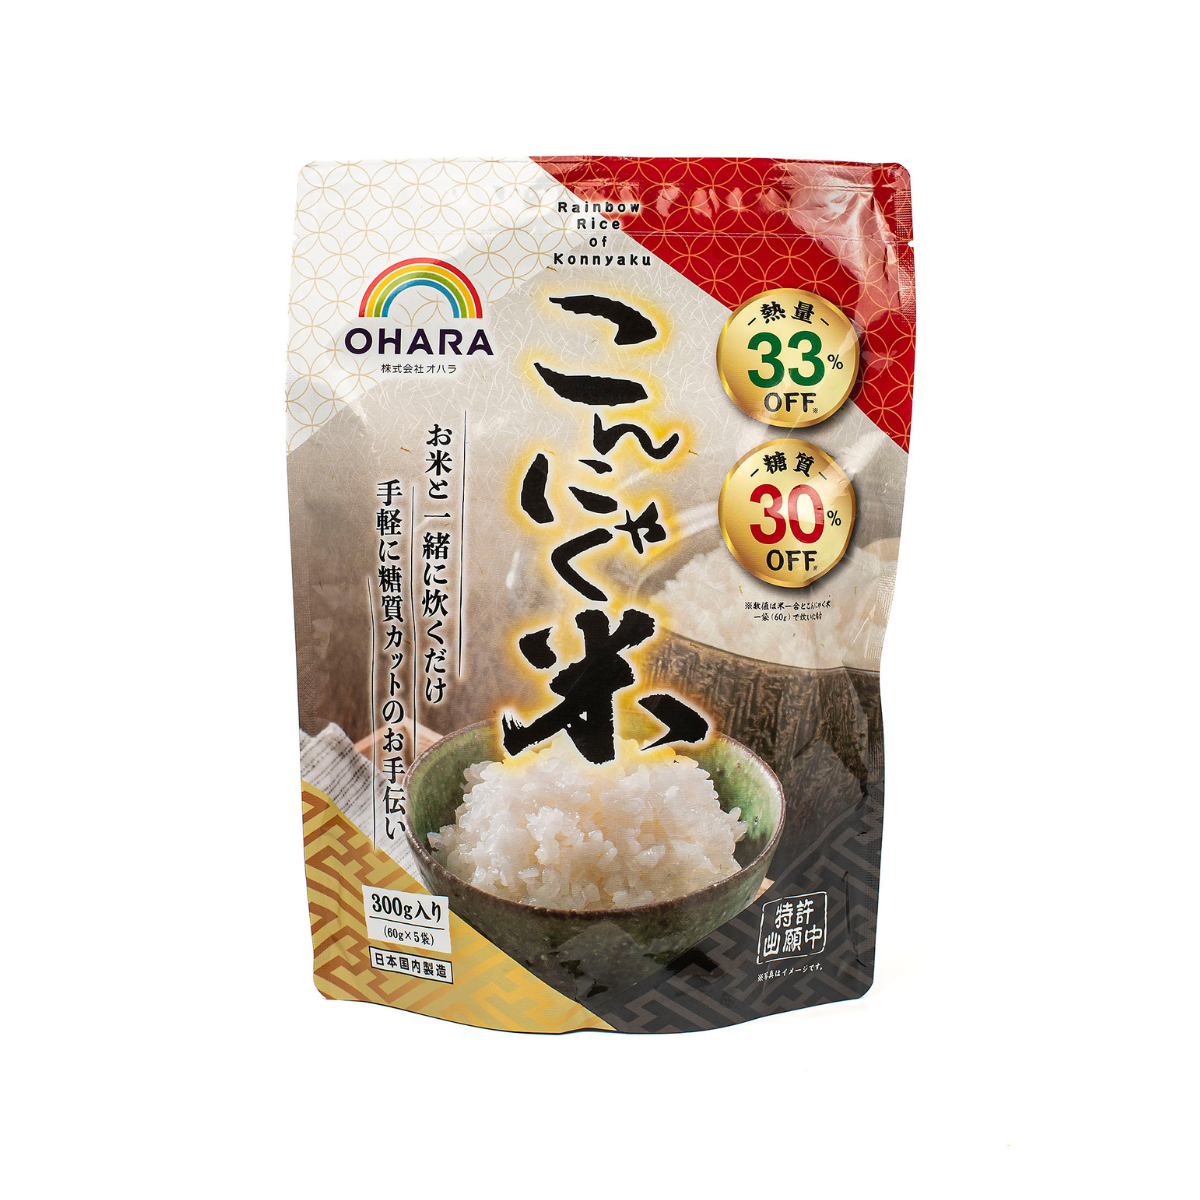 Konjac Grain - Shirataki Rice, 10.58 oz